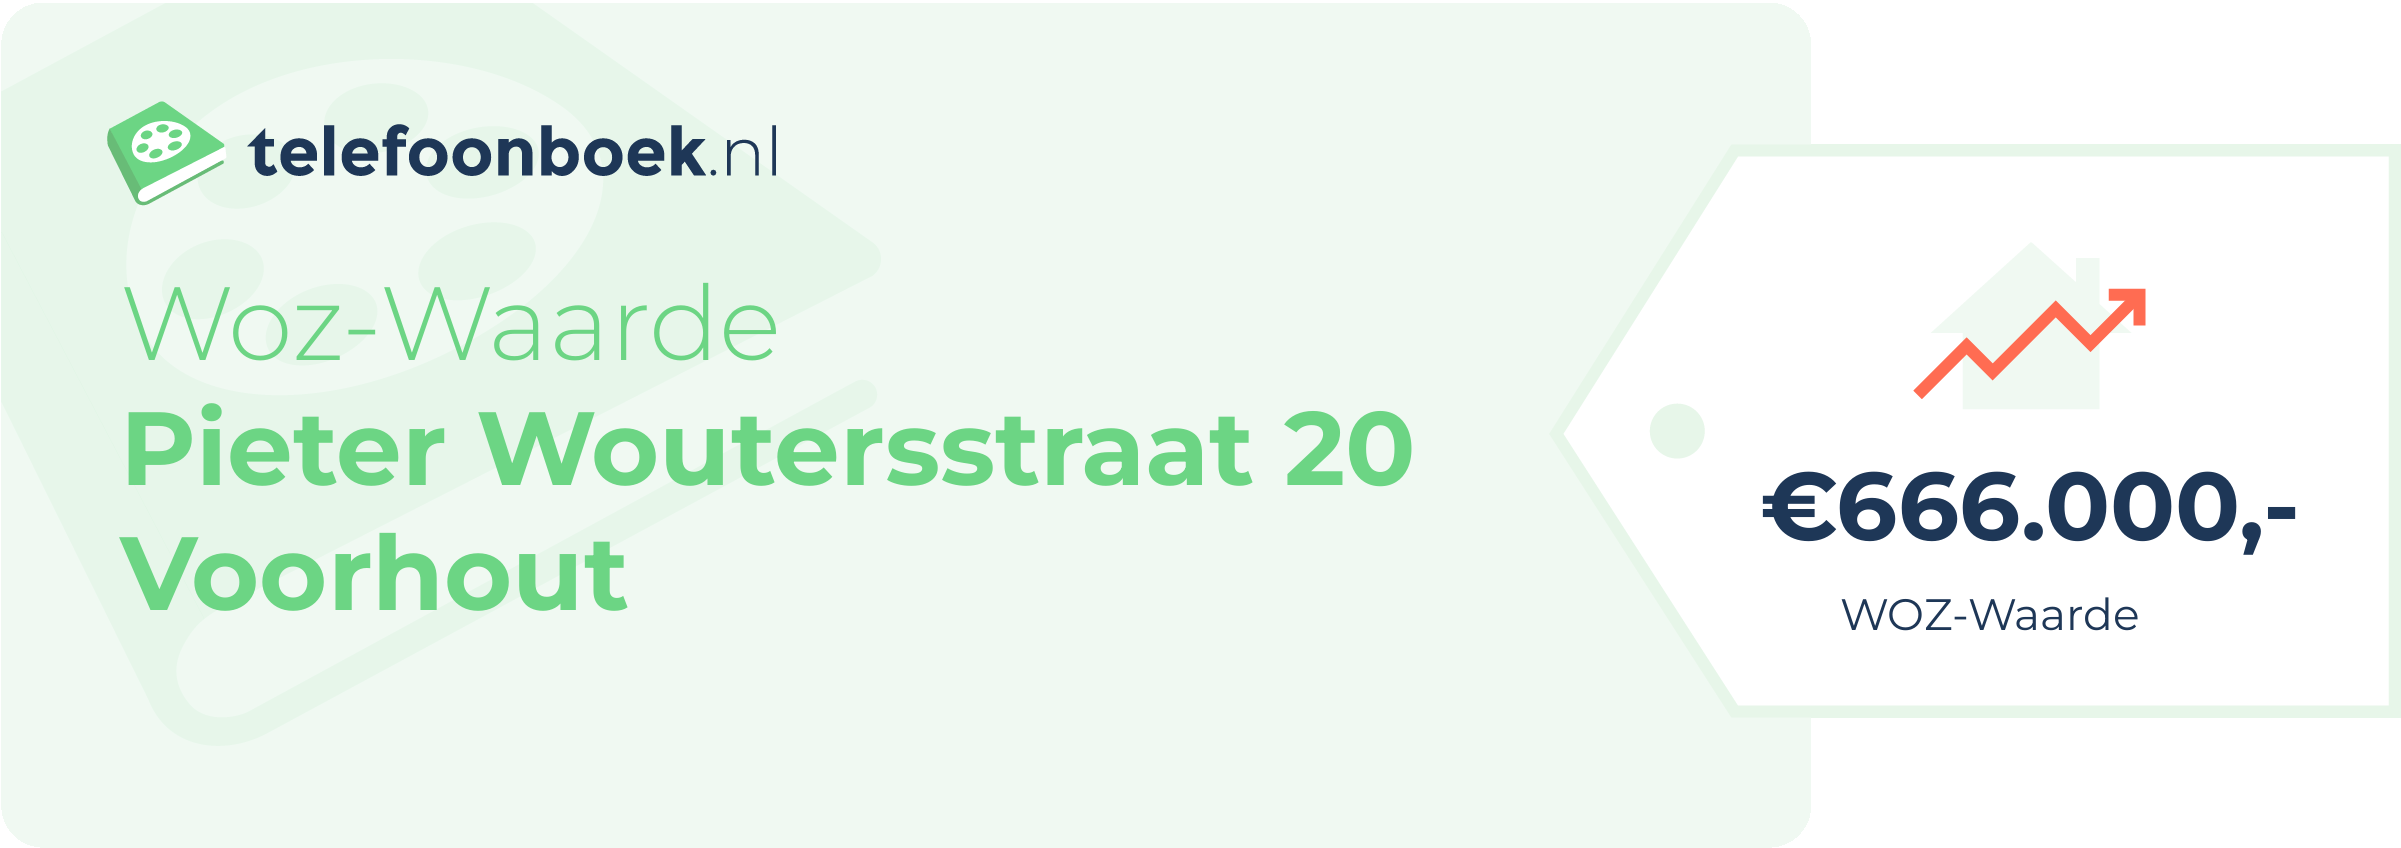 WOZ-waarde Pieter Woutersstraat 20 Voorhout